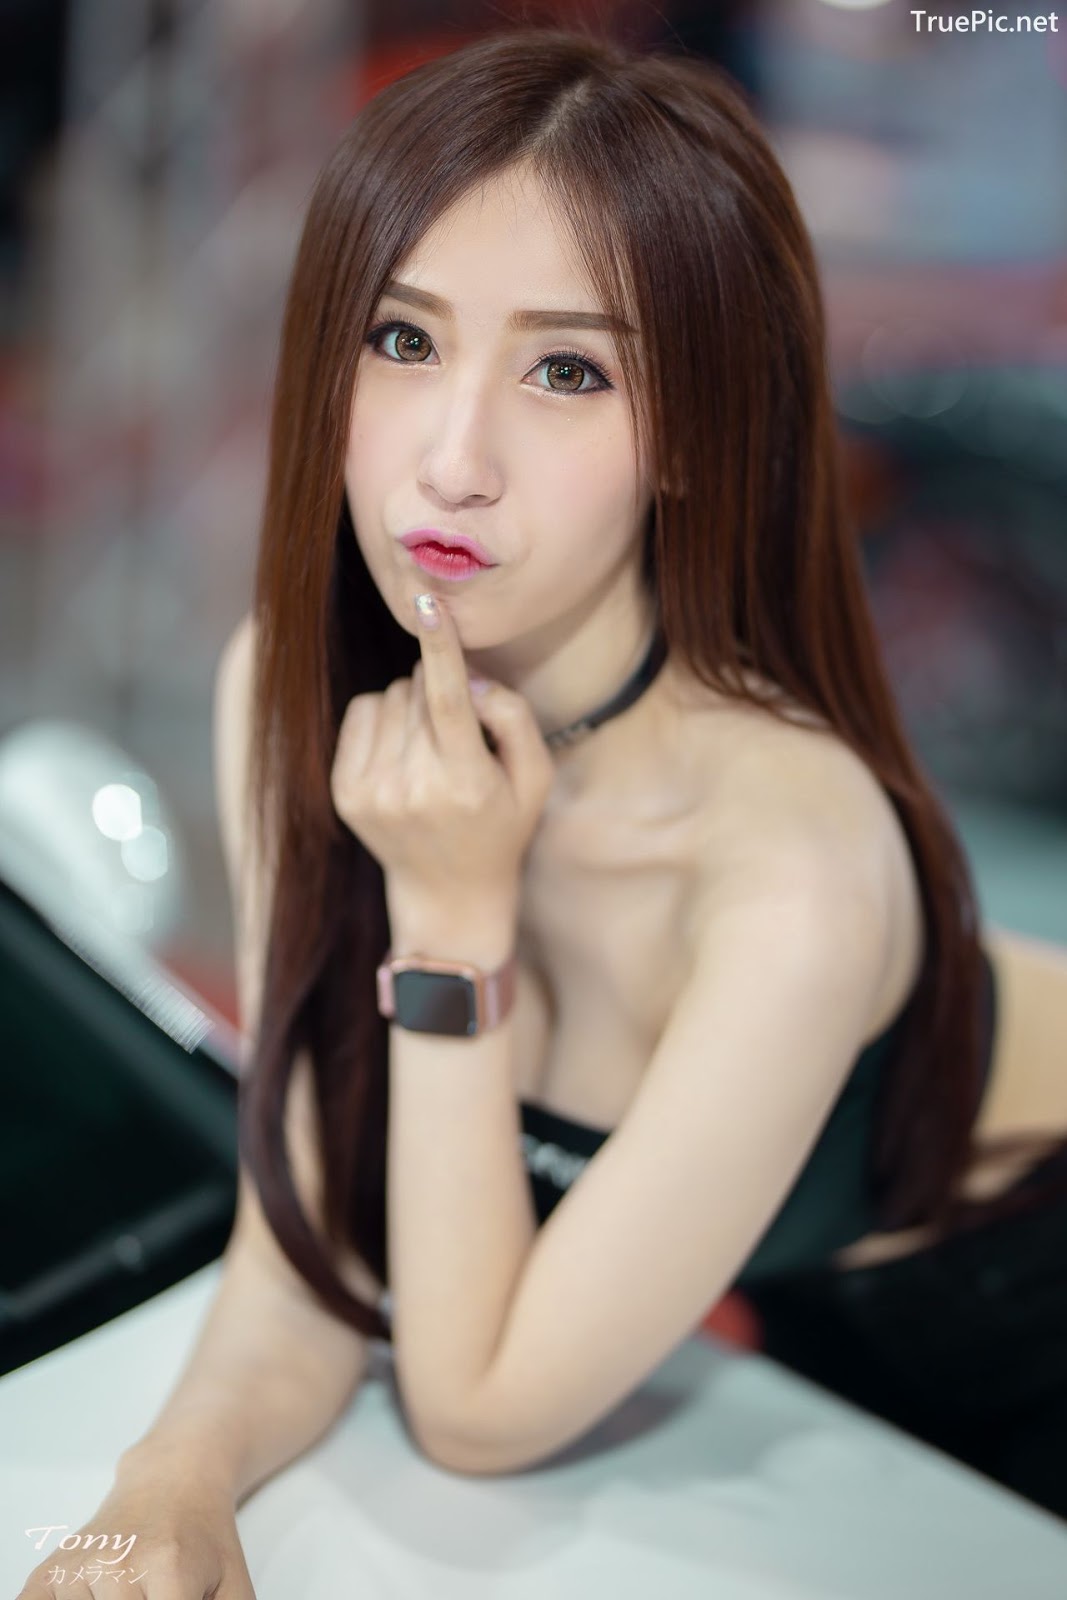 Image-Thailand-Hot-Model-Thai-Racing-Girl-At-Bangkok-Auto-Salon-2019-TruePic.net- Picture-20